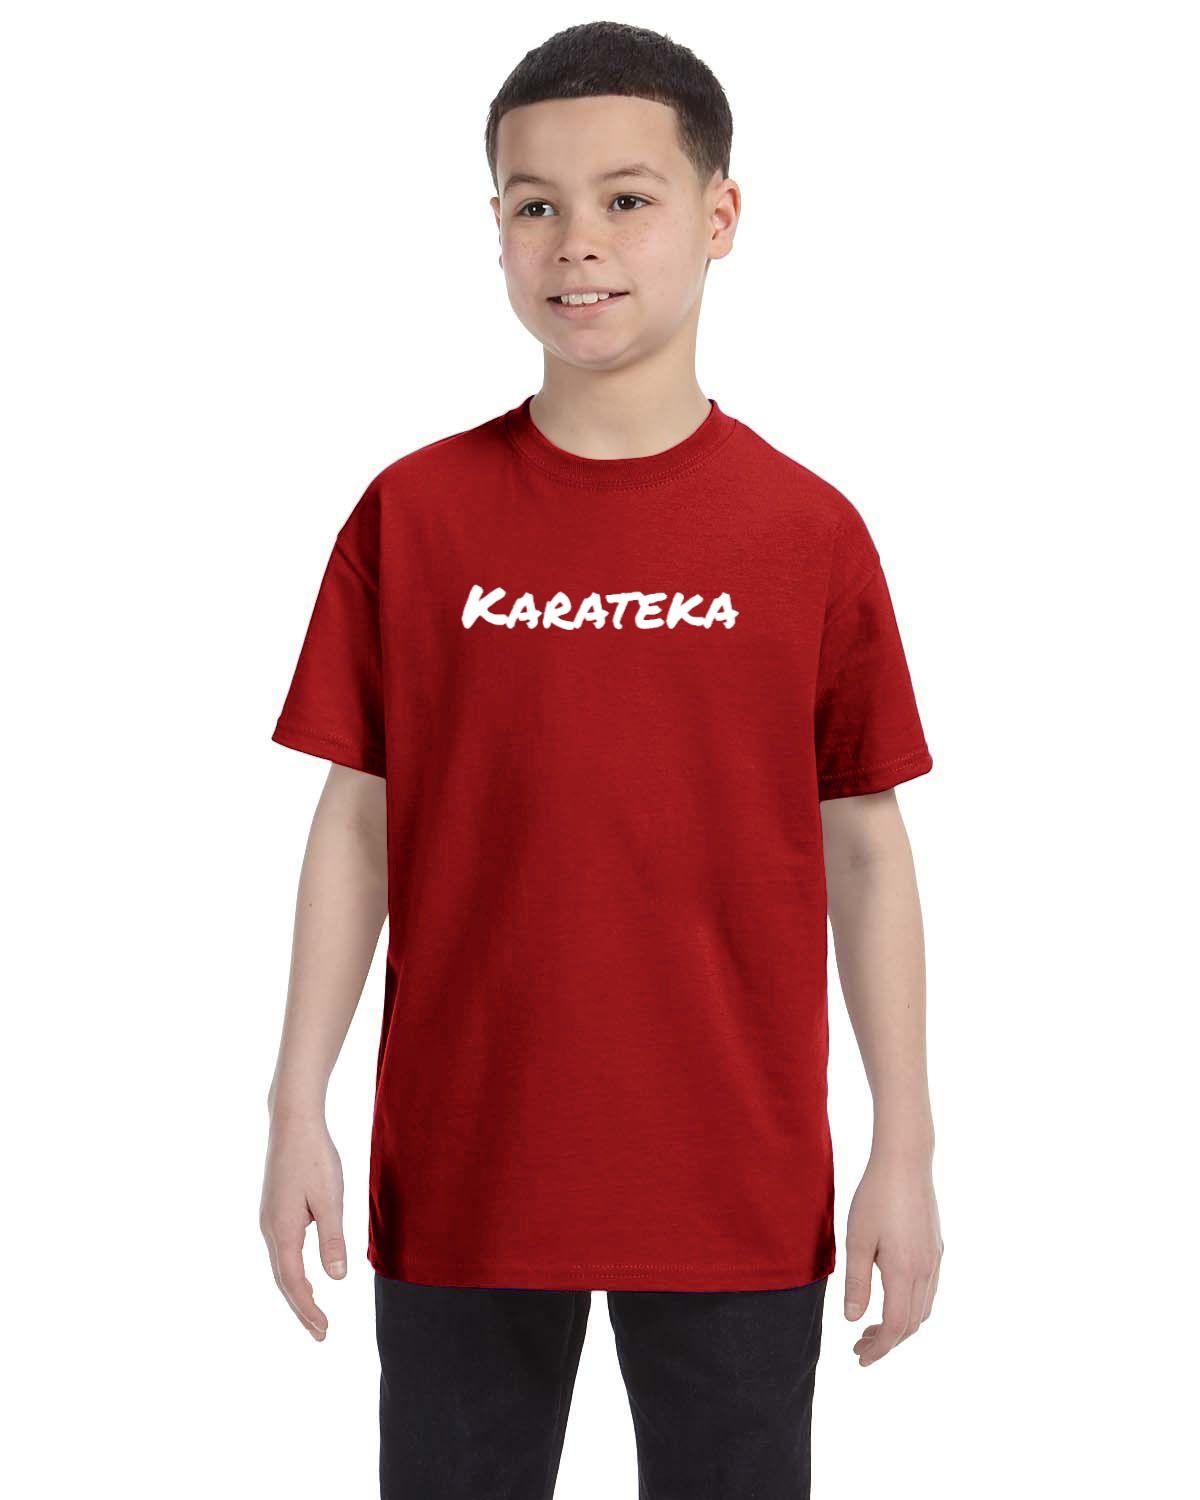 Karateka Kids T-Shirt